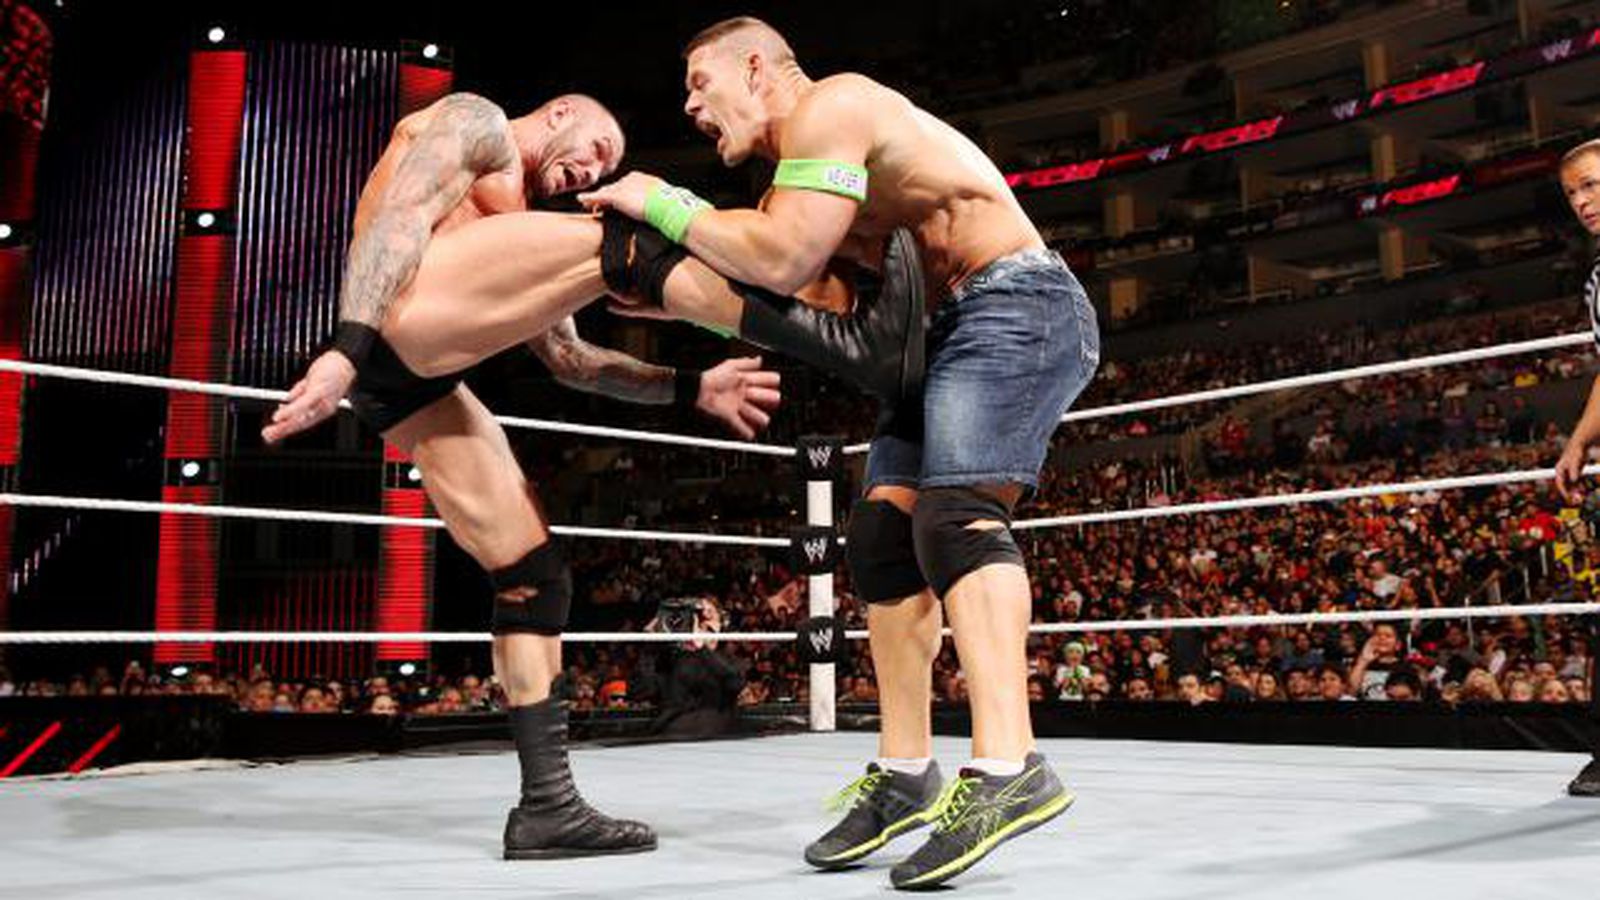 WWE Raw video playlist from Feb. 10, 2014: Cena vs. Orton, S